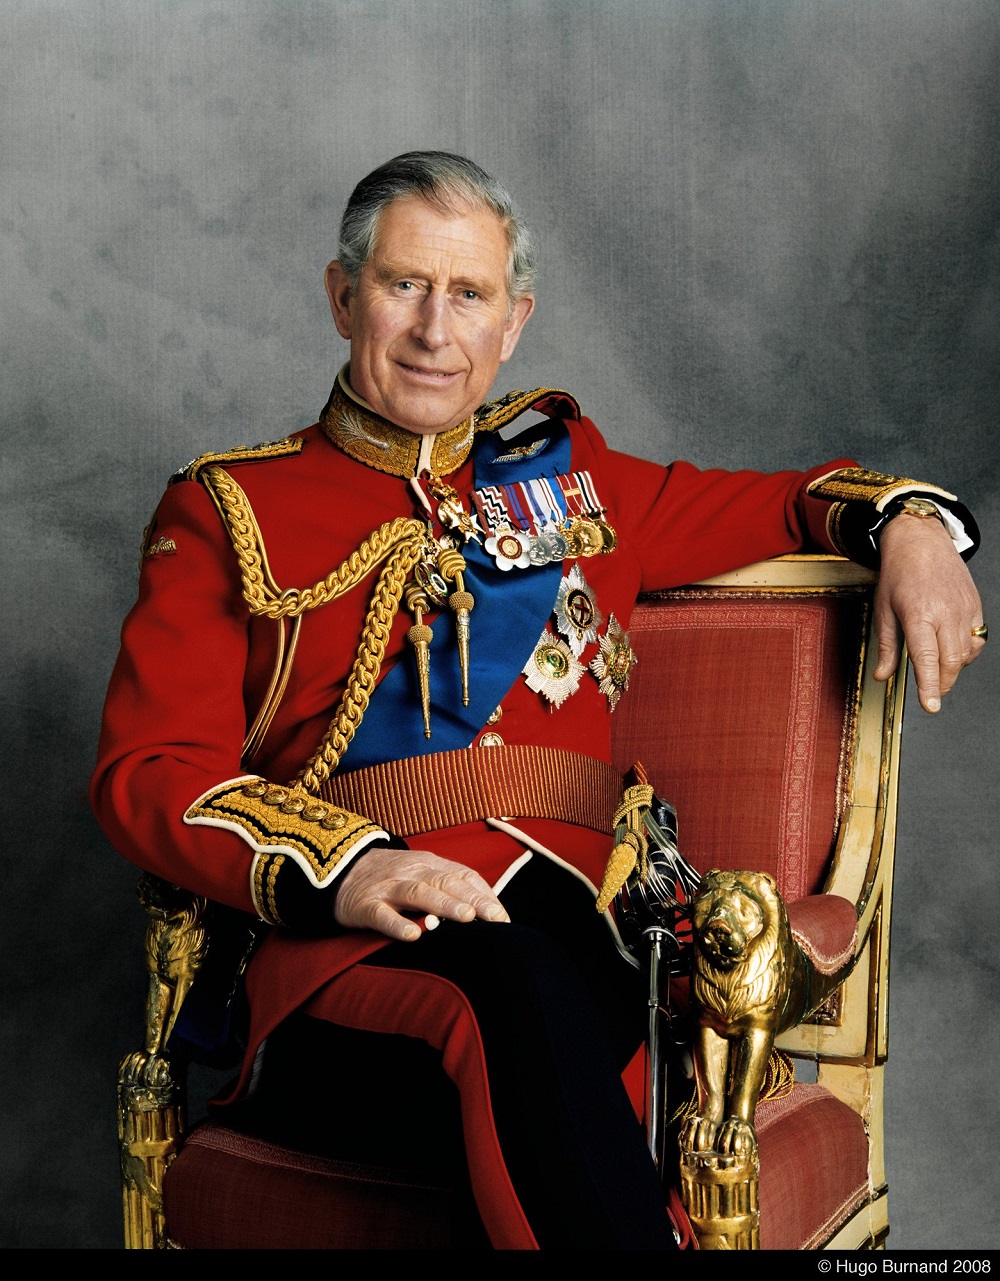 Prince of Wales 60th birthday portrait